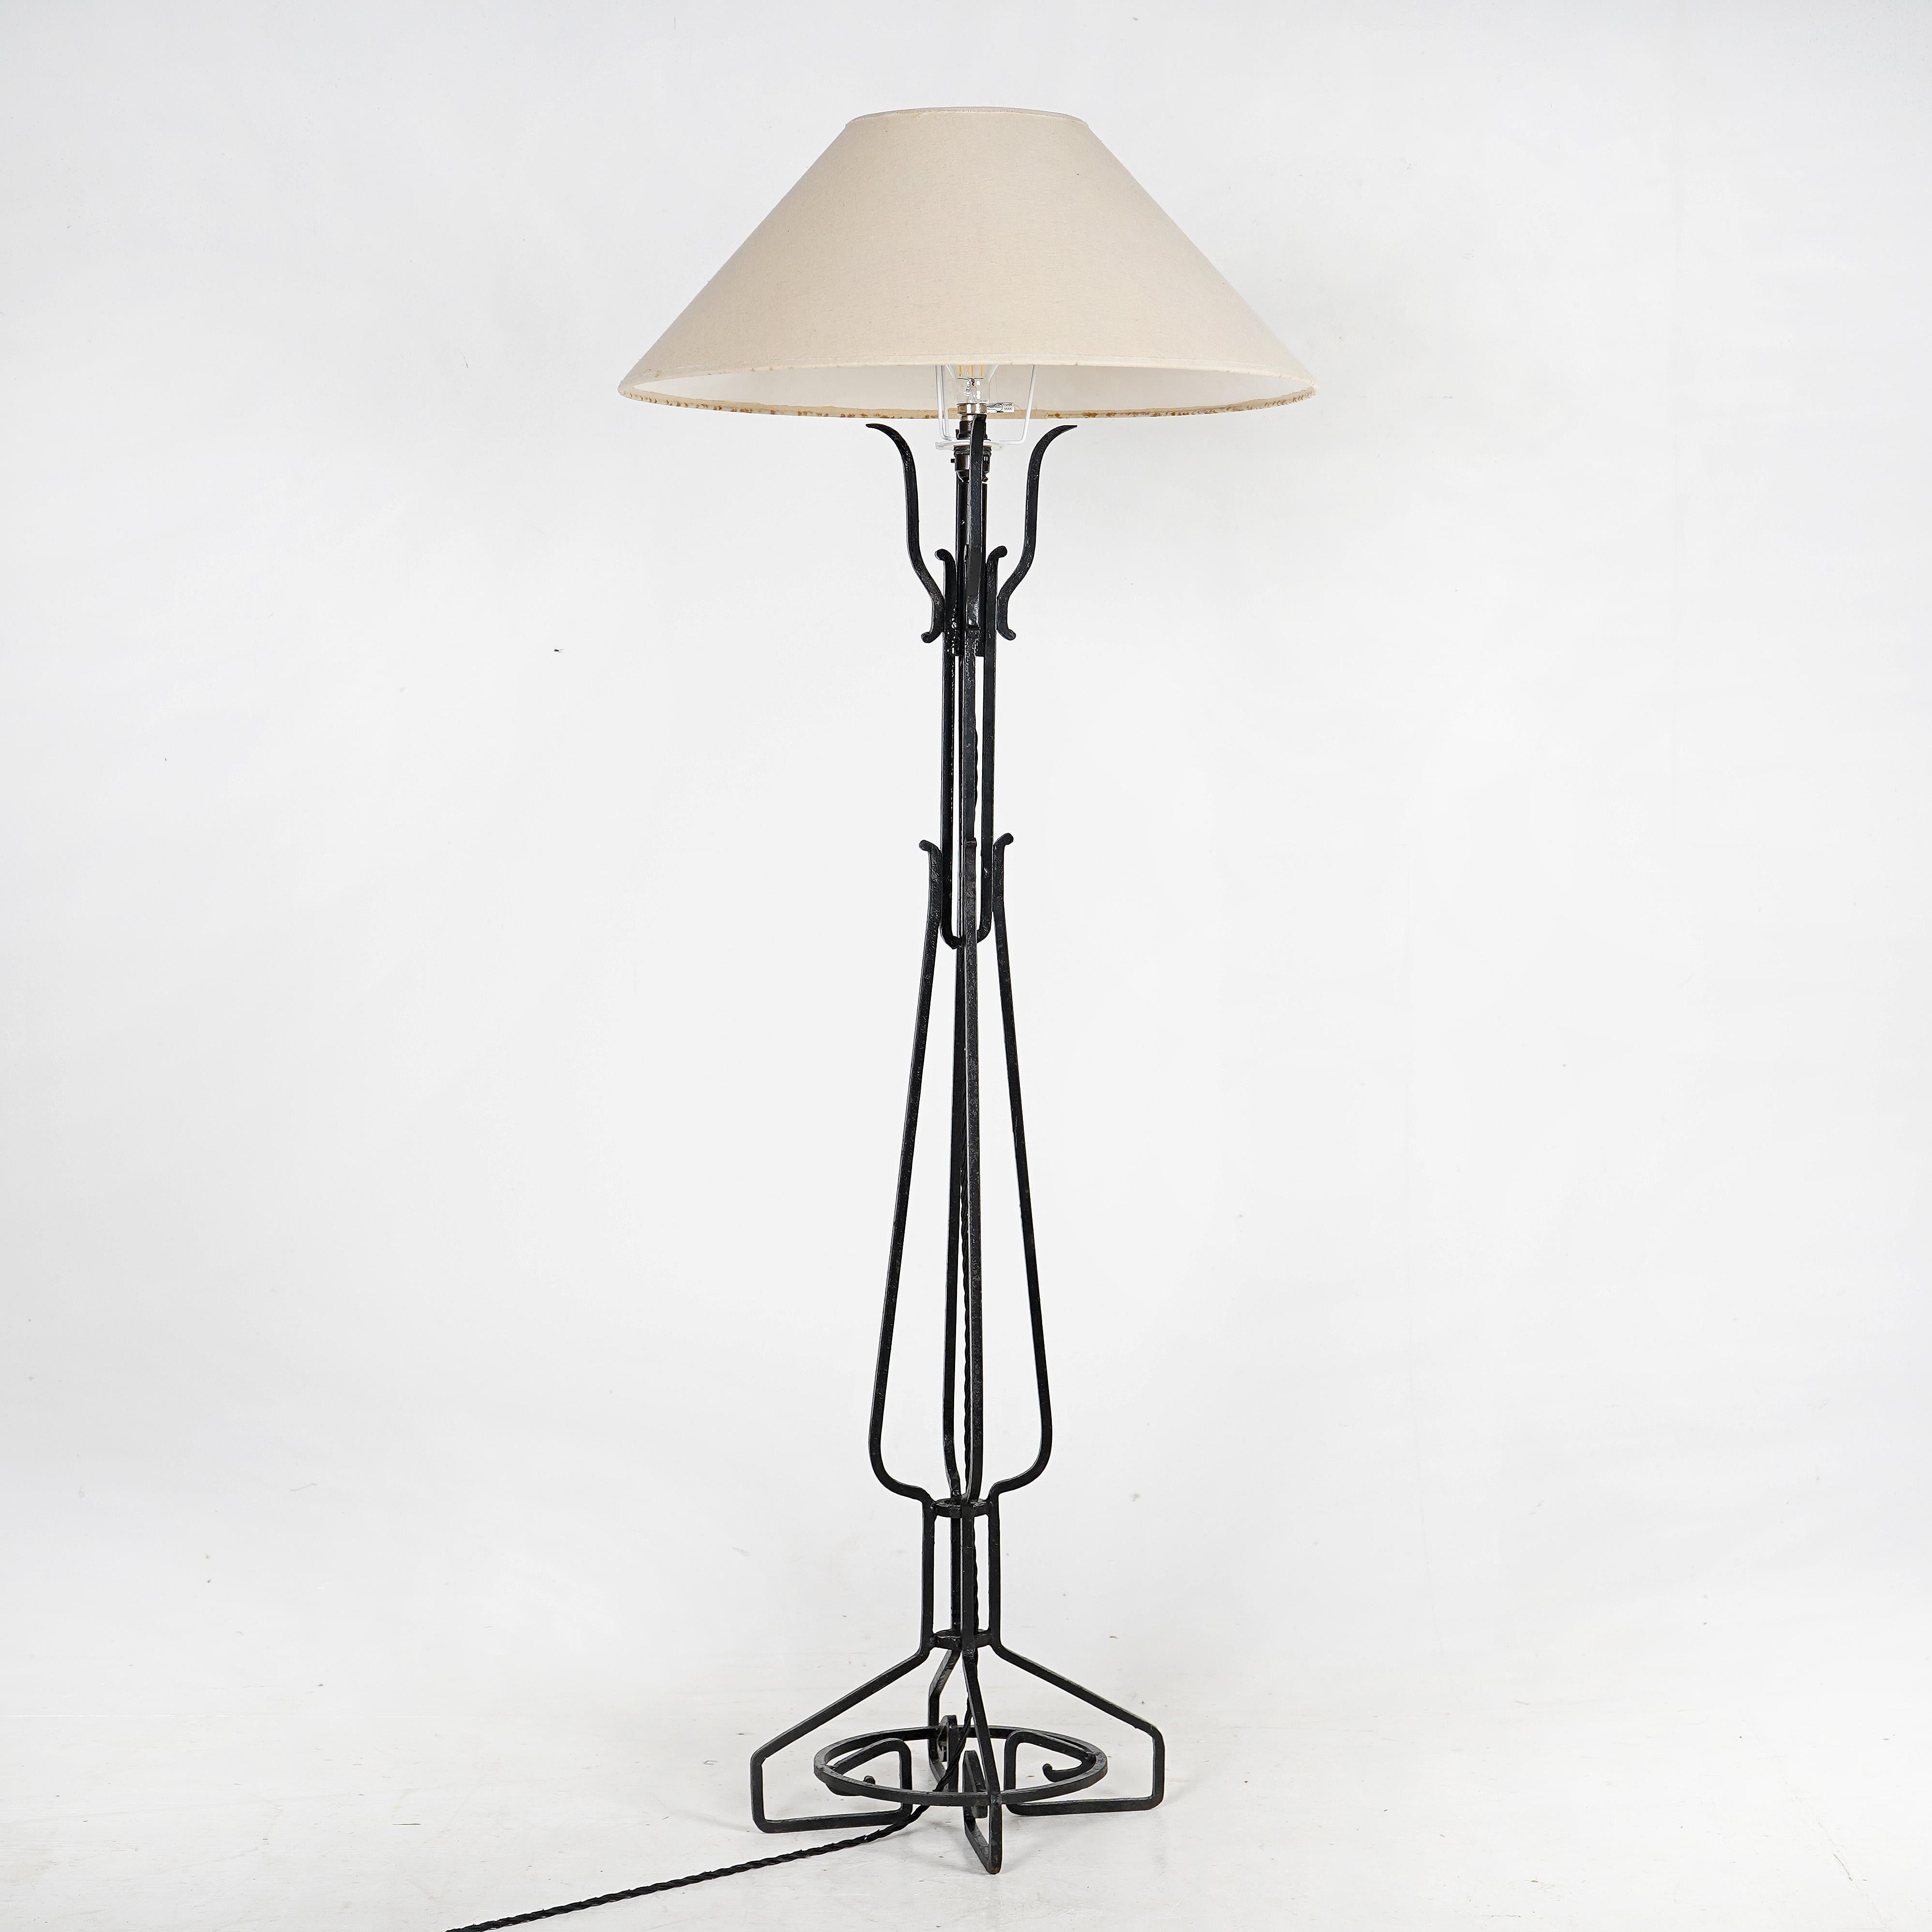 British Pair Of Neoclassical Style Black Iron Floor Lamps